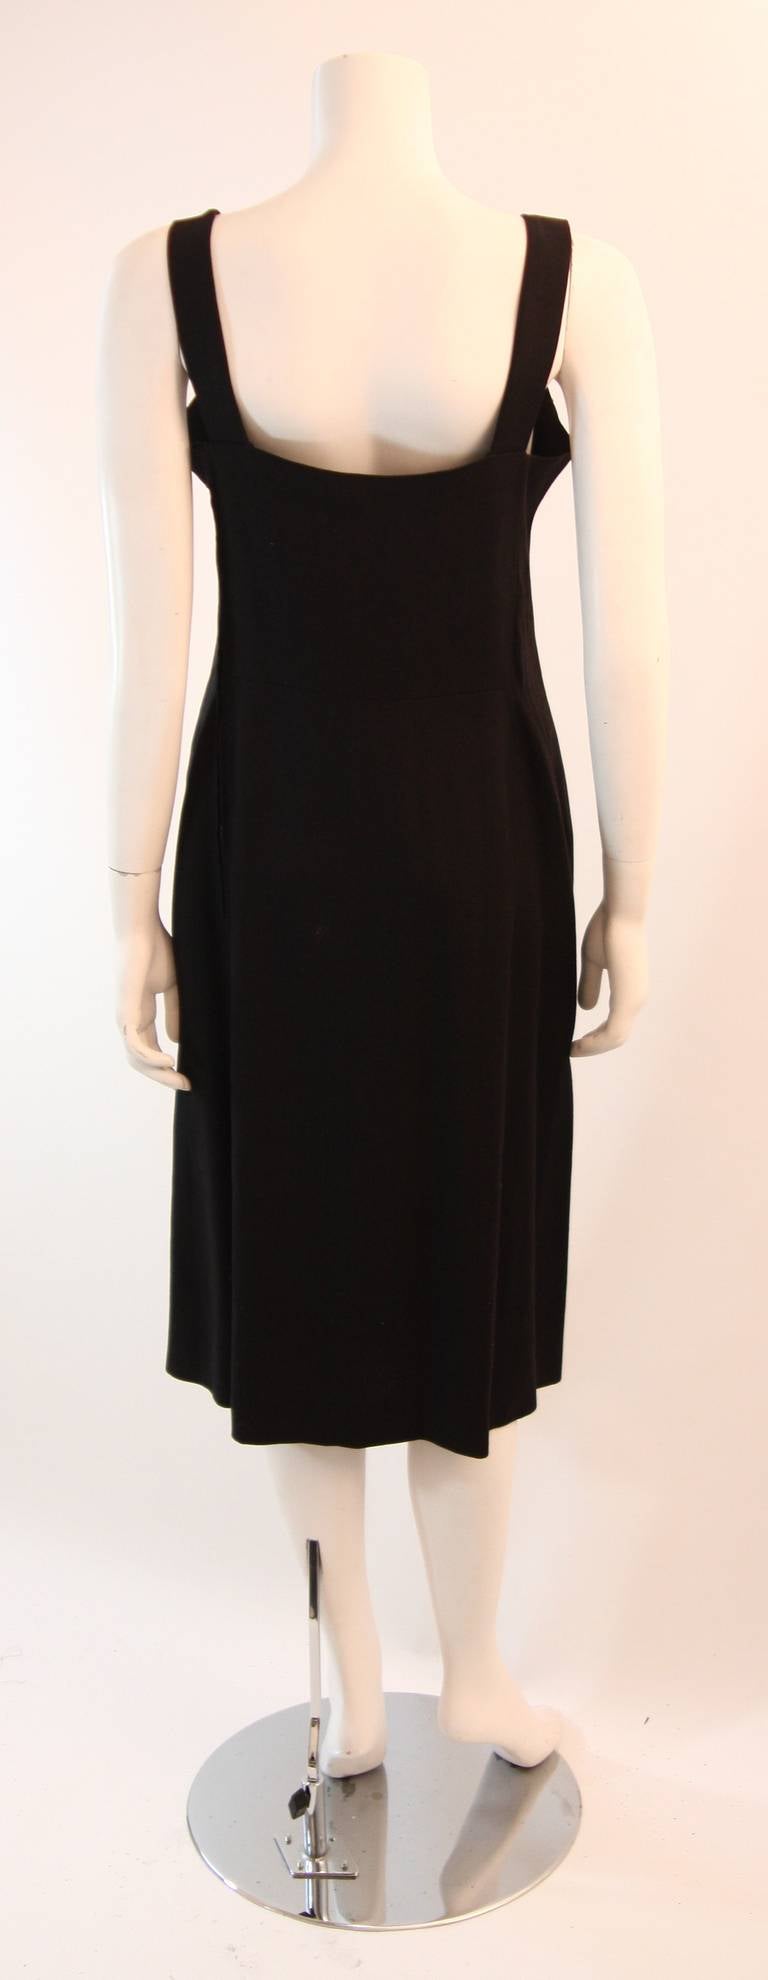  Pierre Balmain 'Couture' Black Linen Dress with Bow Accent For Sale 5